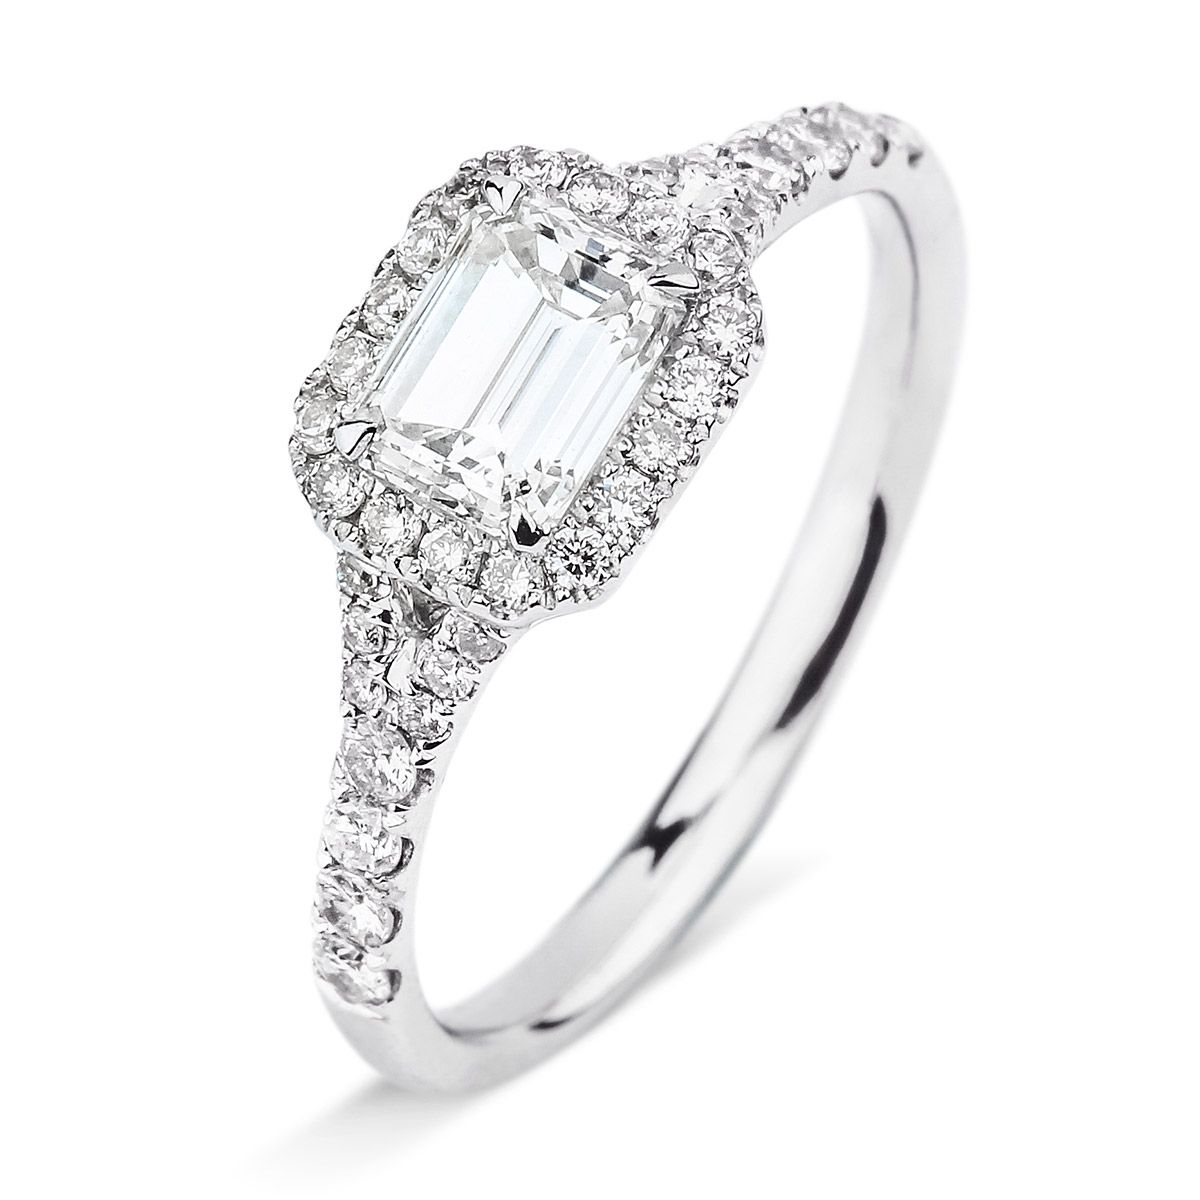 White Diamond Ring, 0.74 Carat, Emerald shape